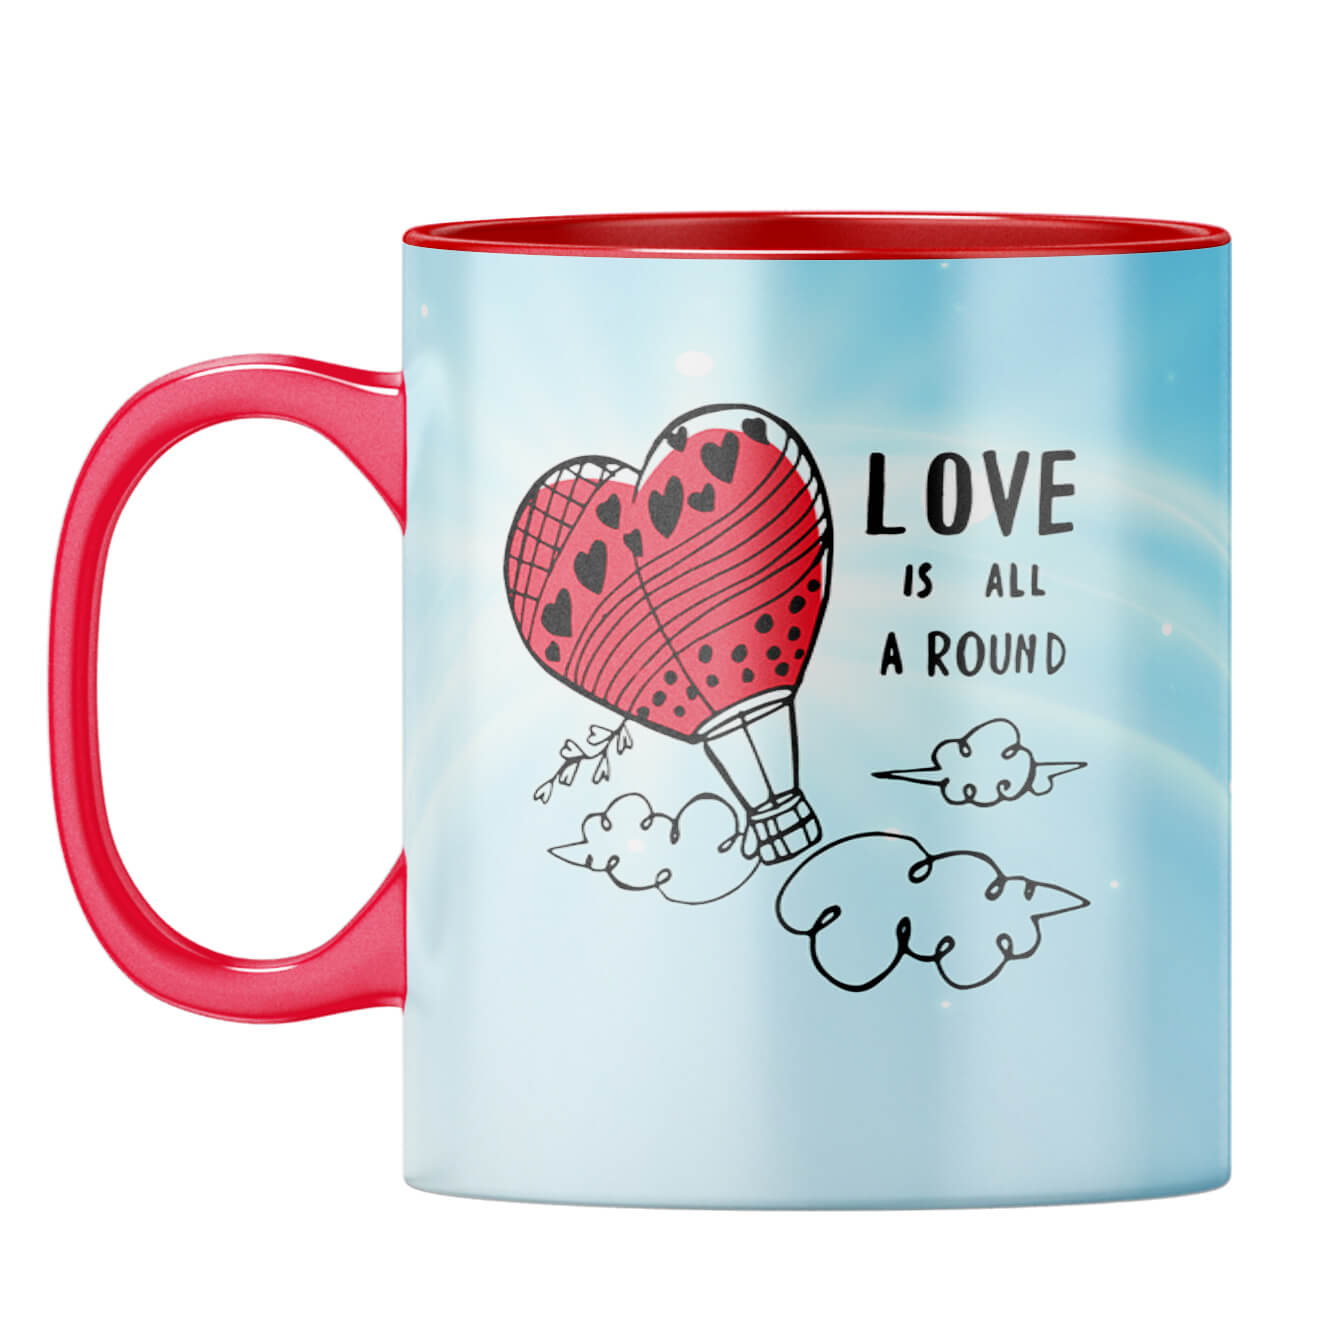 Love is all around Coffee Mug Red